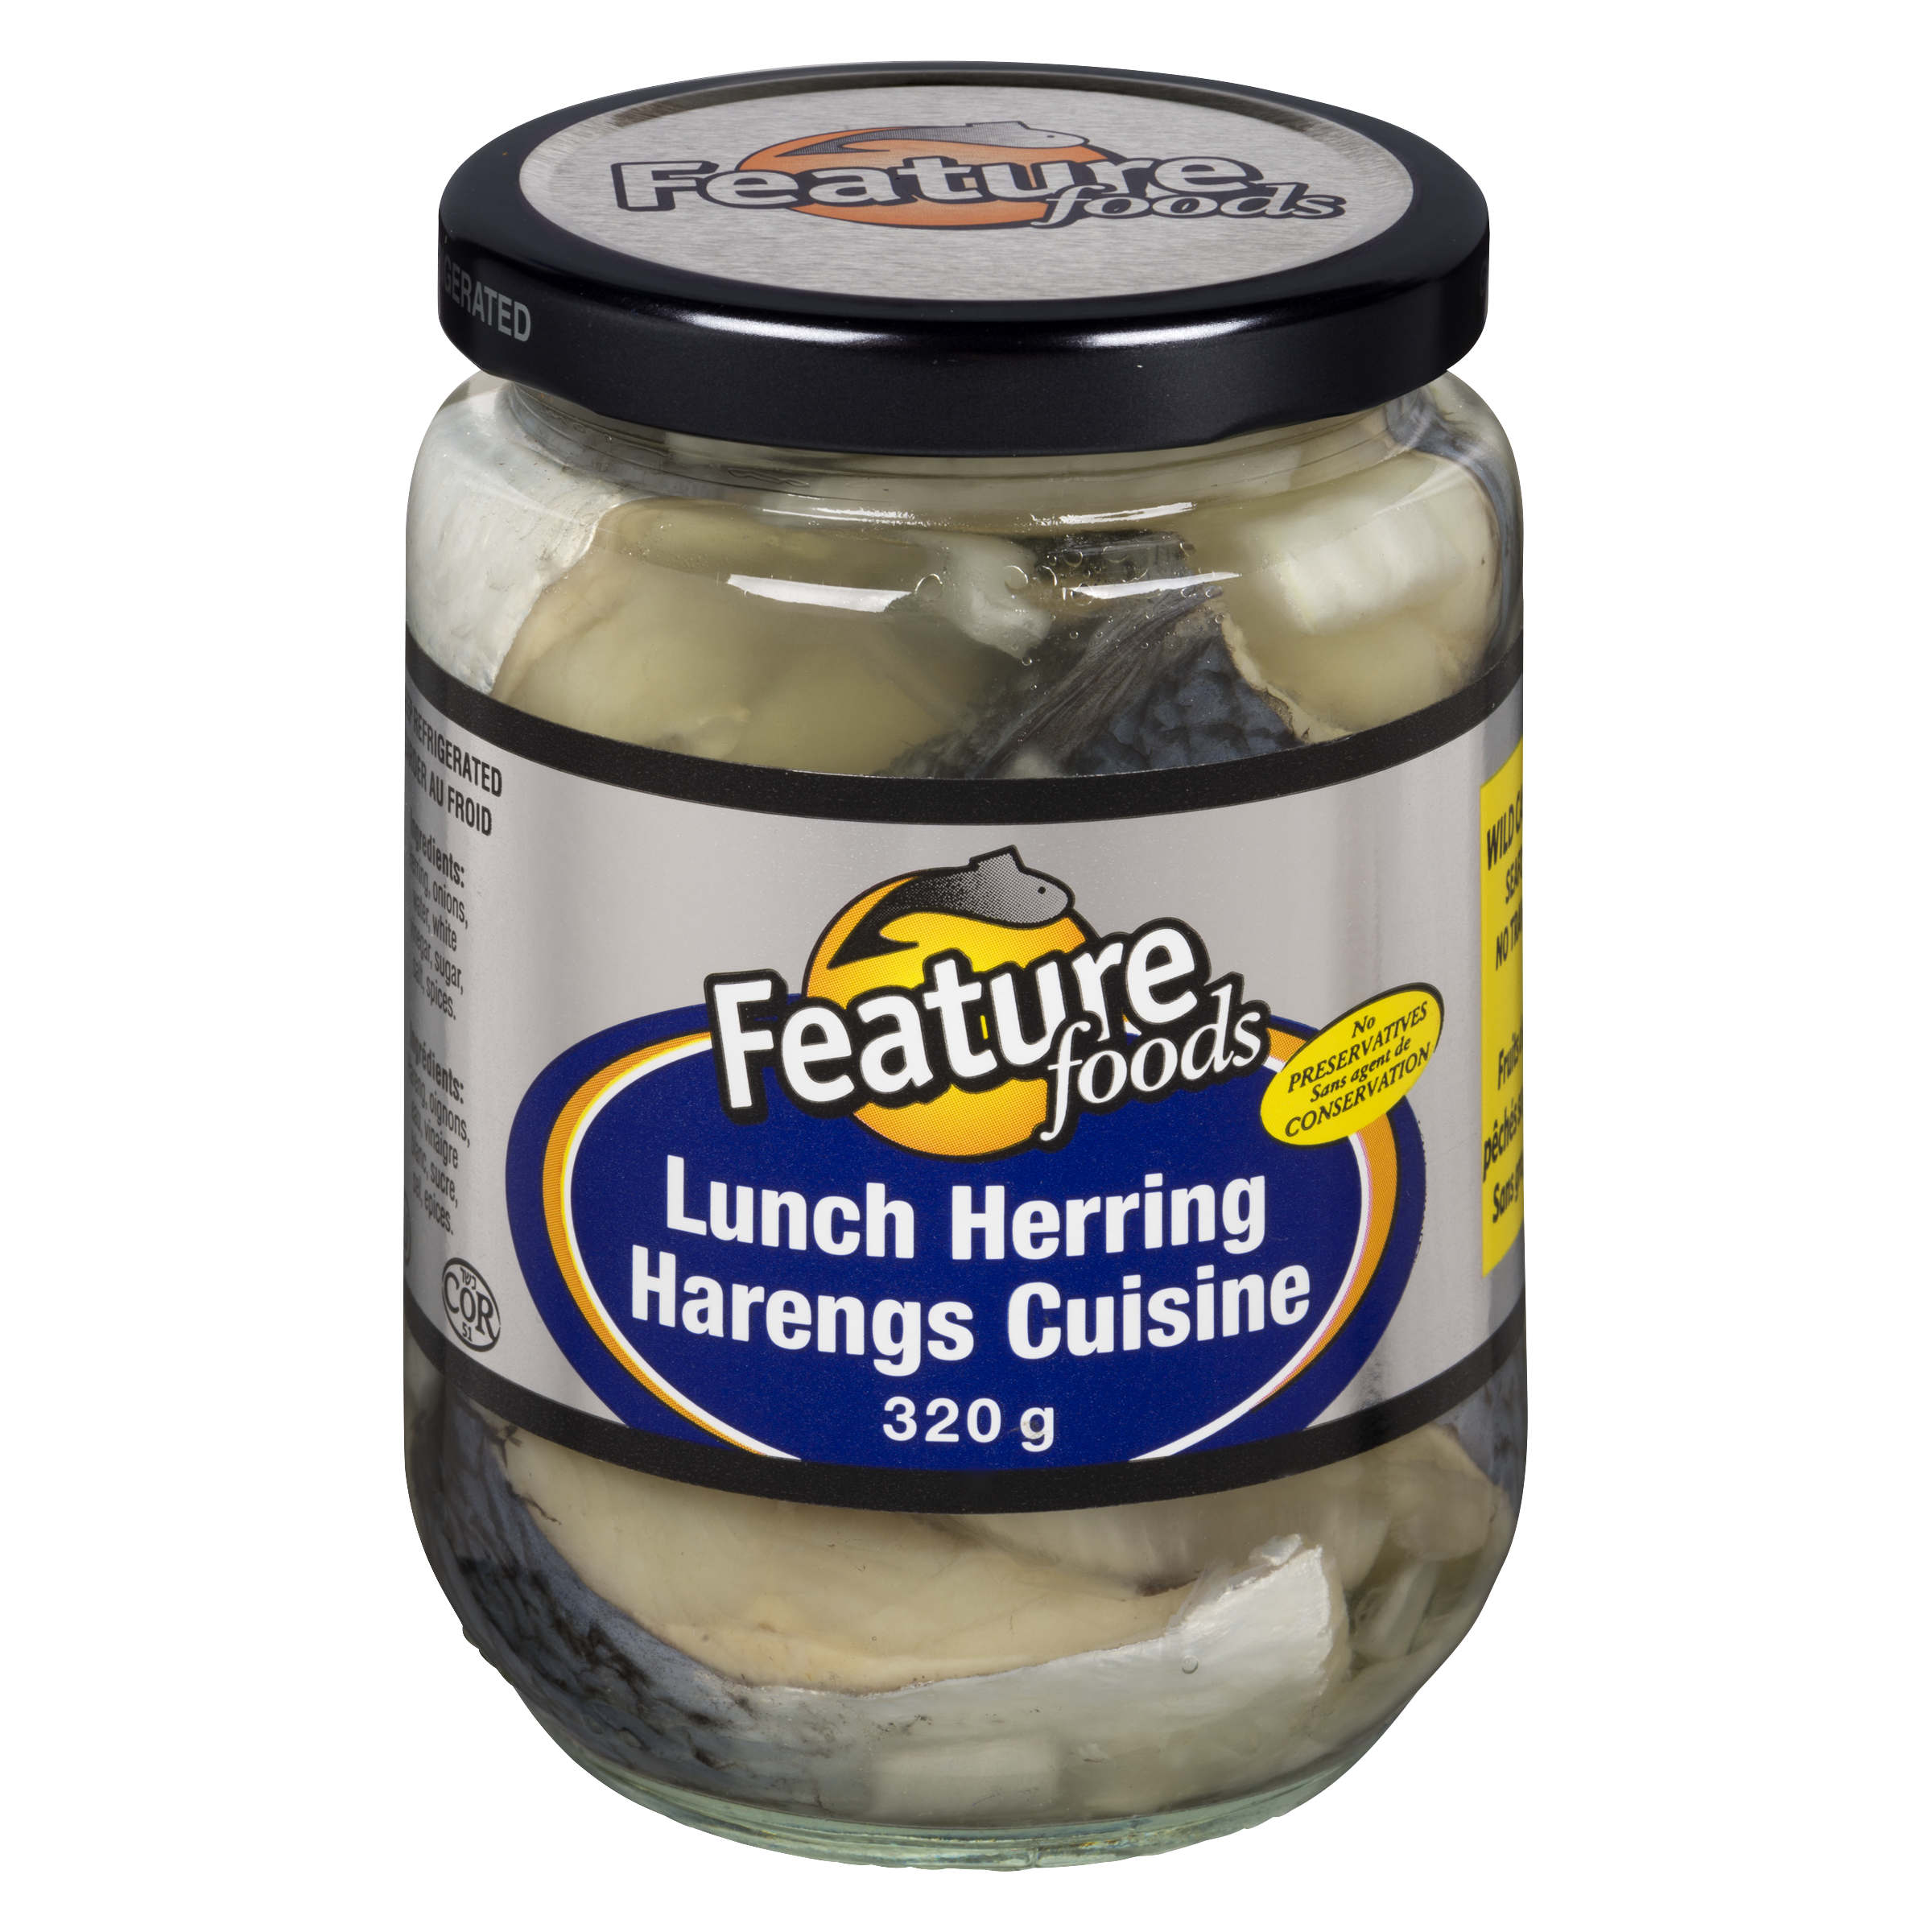 Feature Foods Lunch Herring 320g Jar